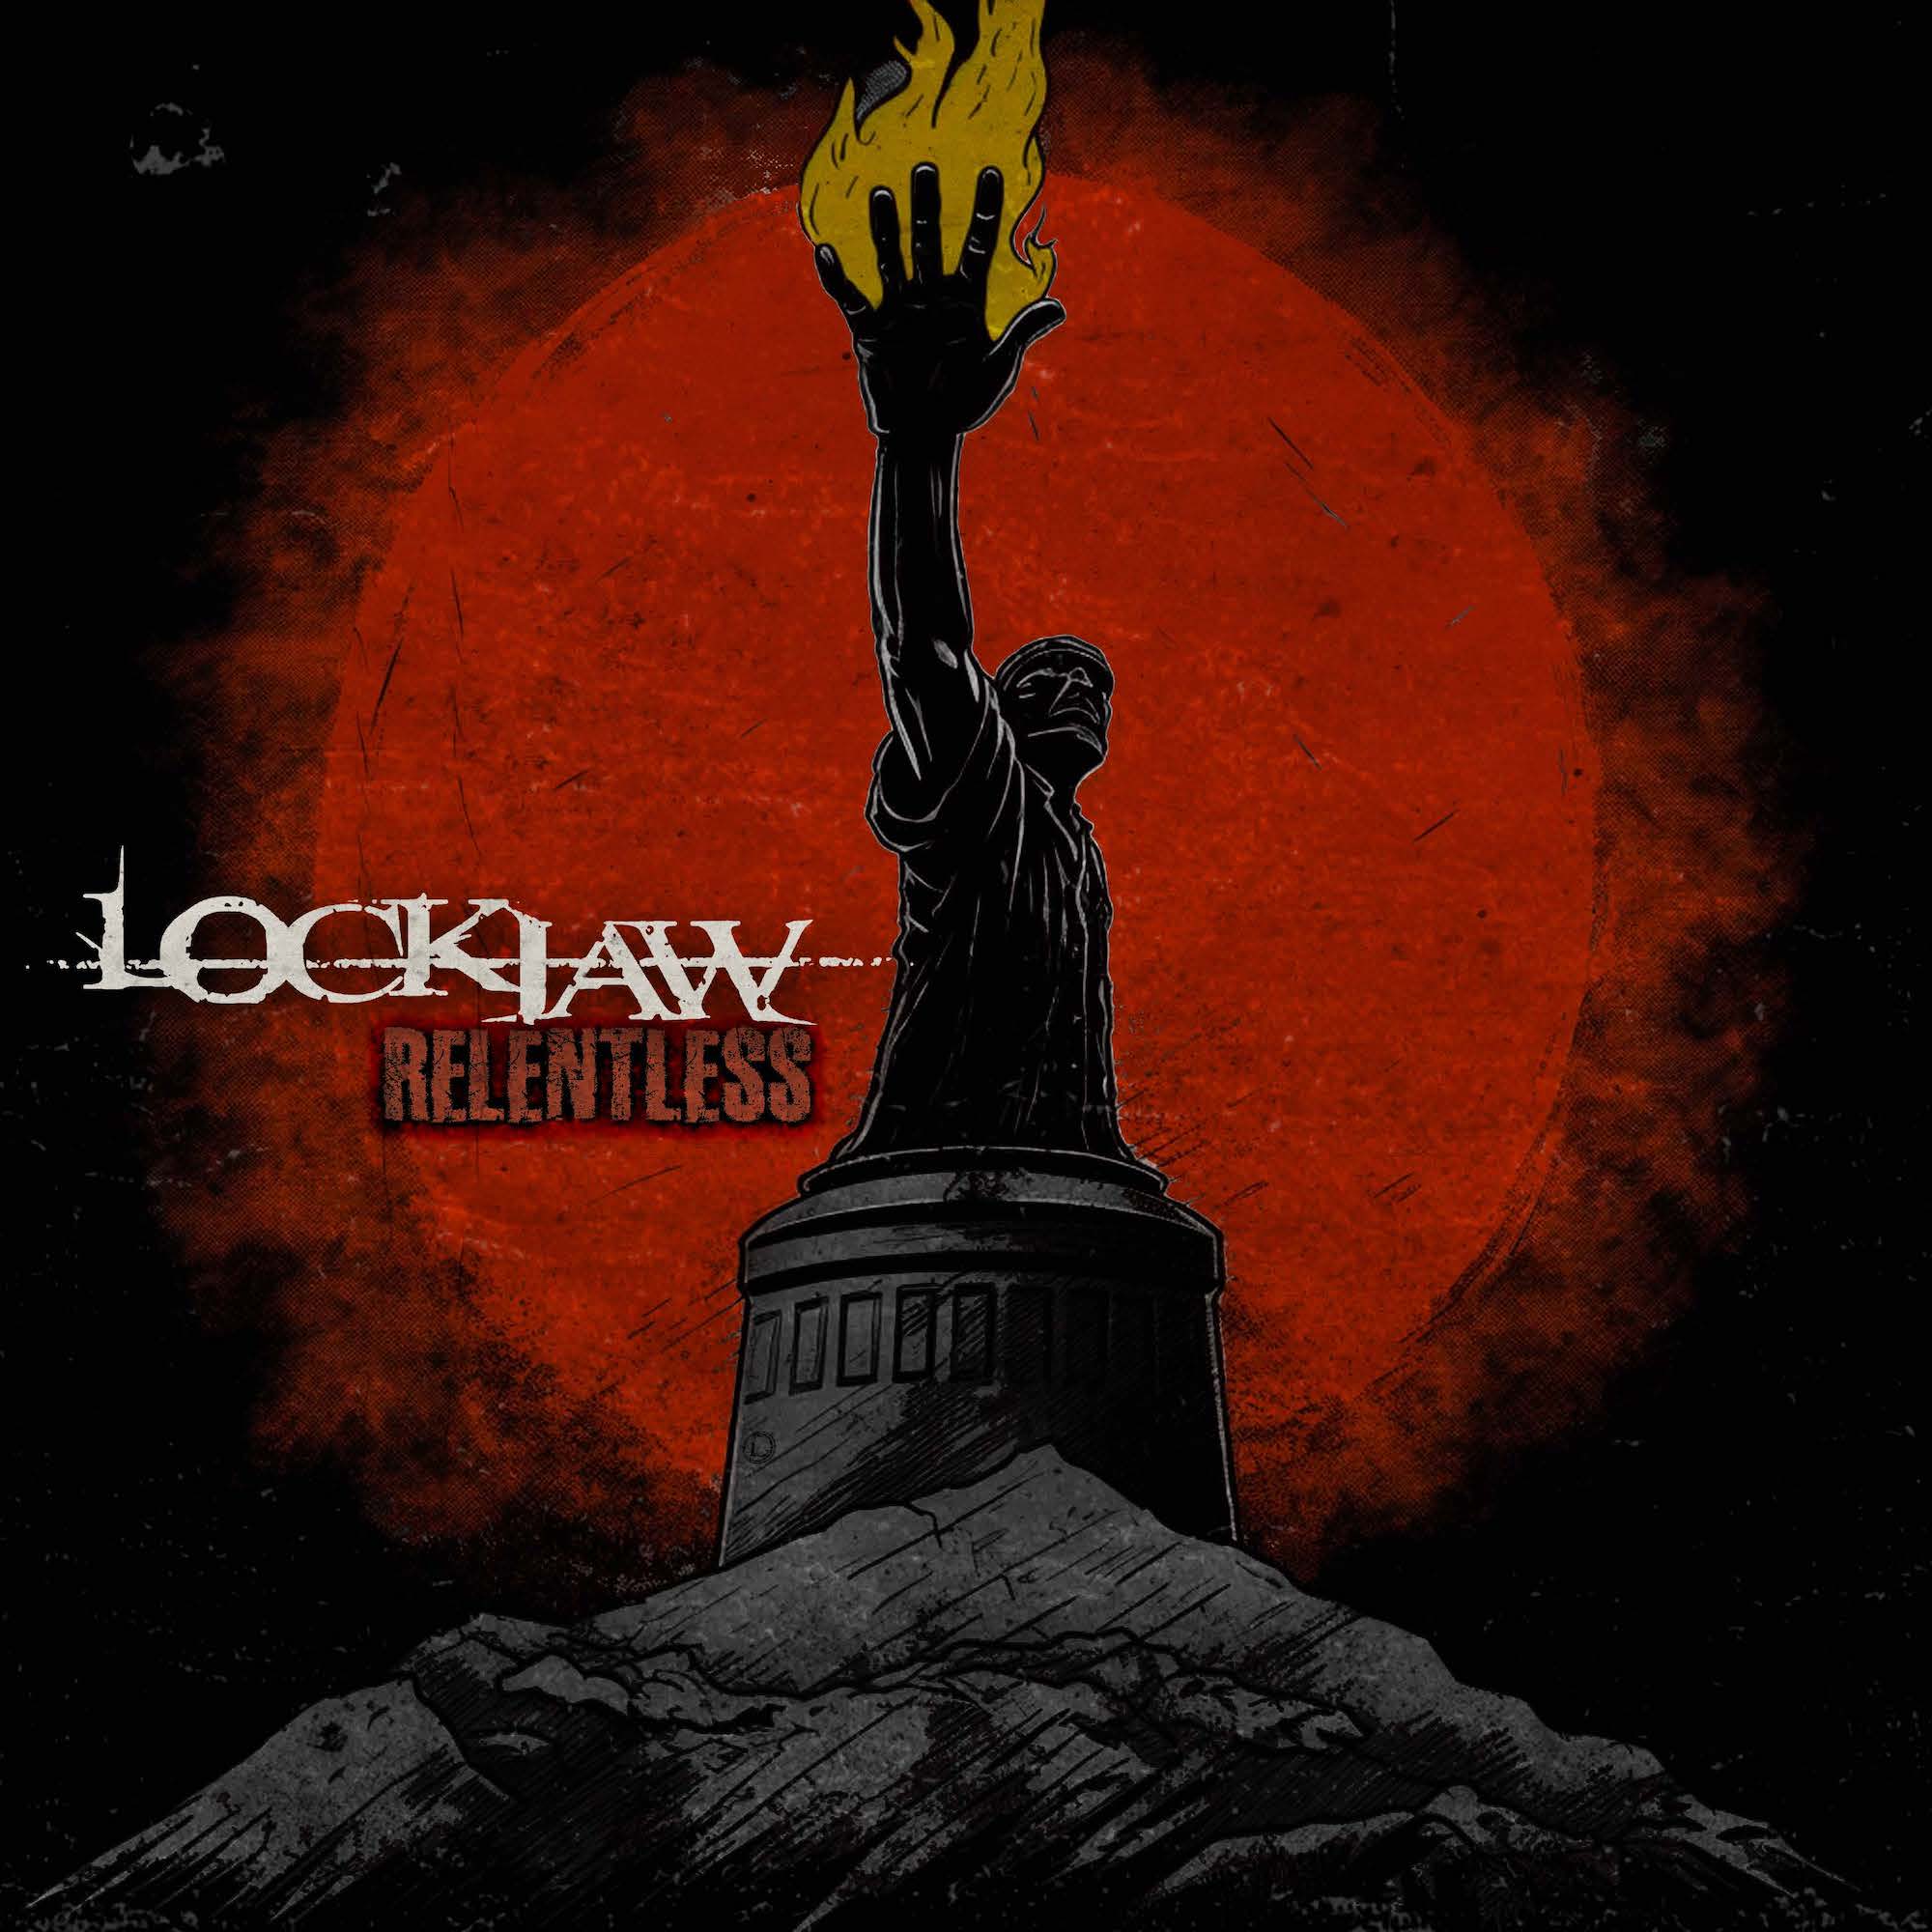 Album Review "Relentless" by Lockjaw